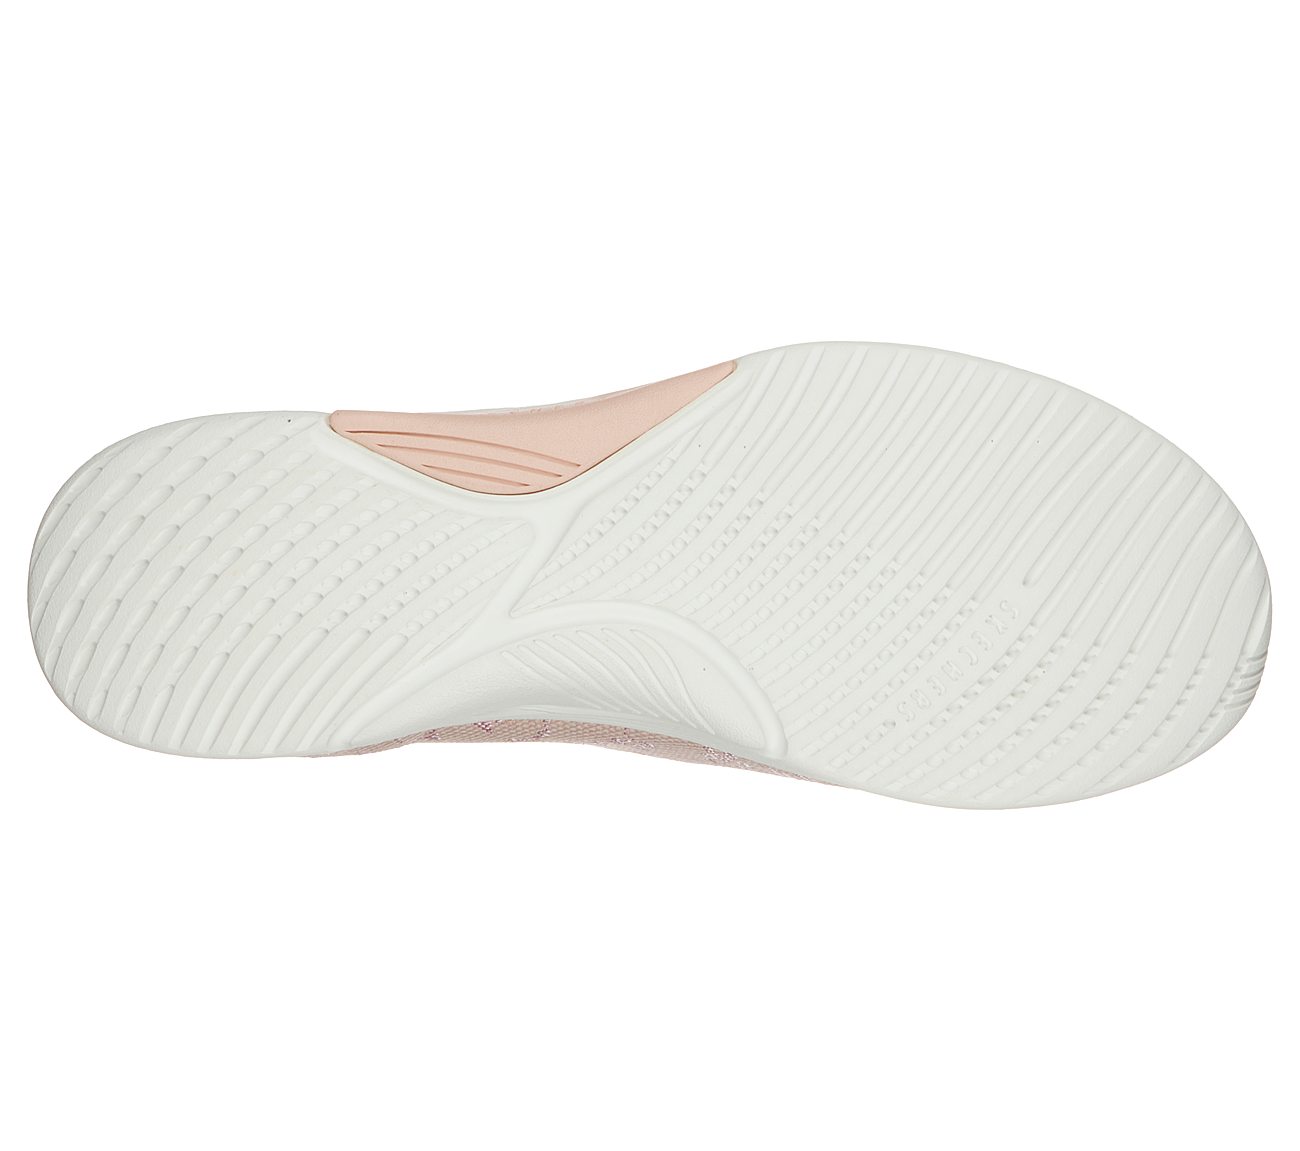 ESLA-GLEEFUL BLISS, ROSE Footwear Bottom View